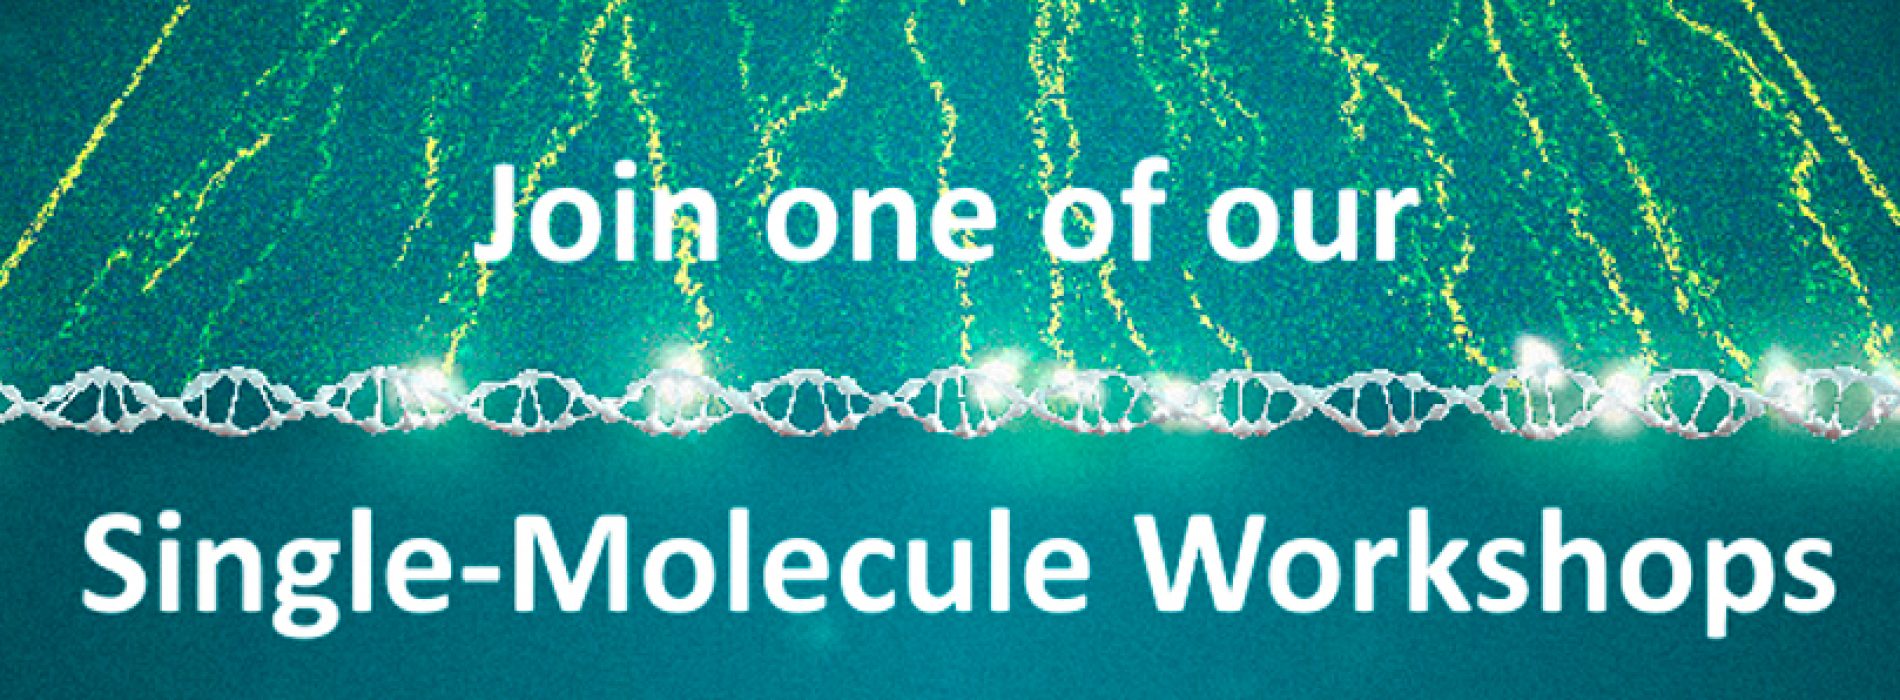 Coming up: Single-Molecule Workshops